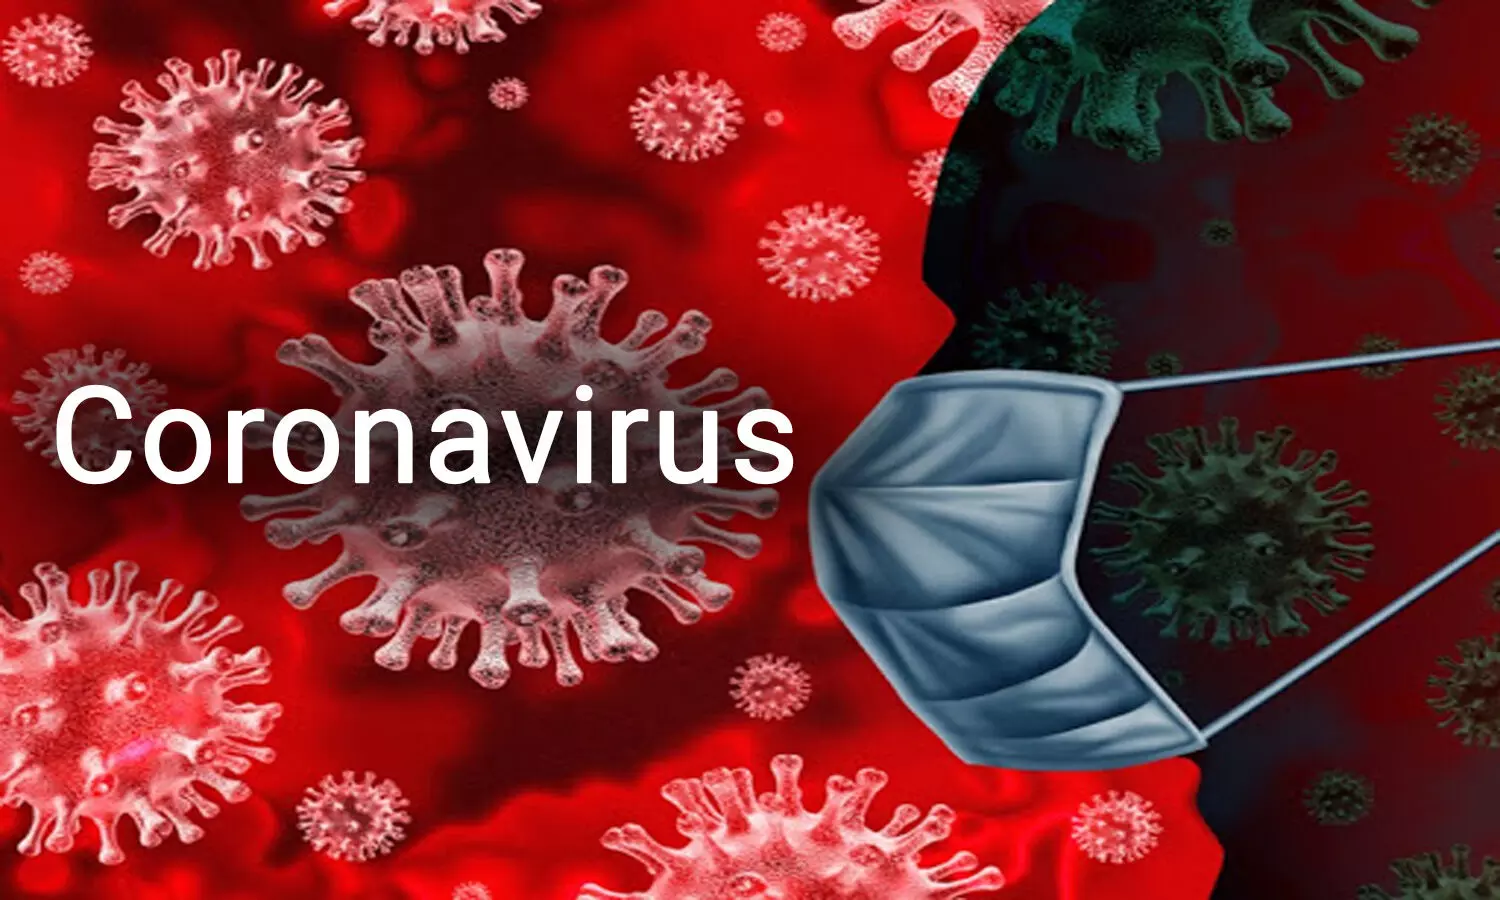 Kerala: 3-year-old child tests positive for Coronavirus